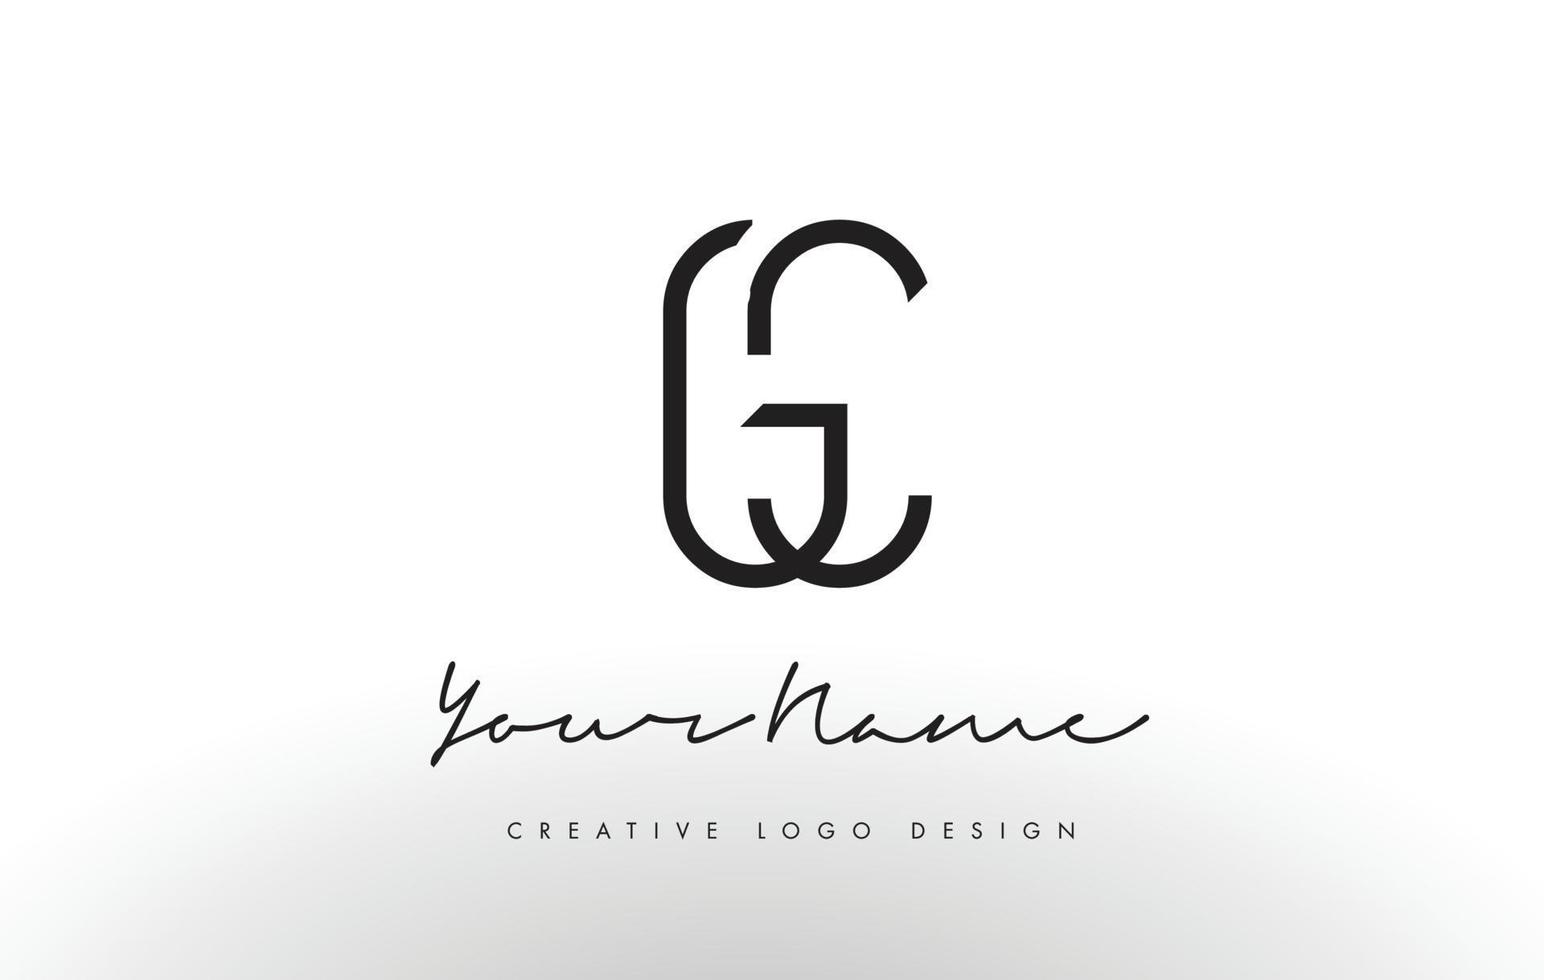 Diseño de logotipo de letras gc delgado. concepto creativo simple letra negra. vector